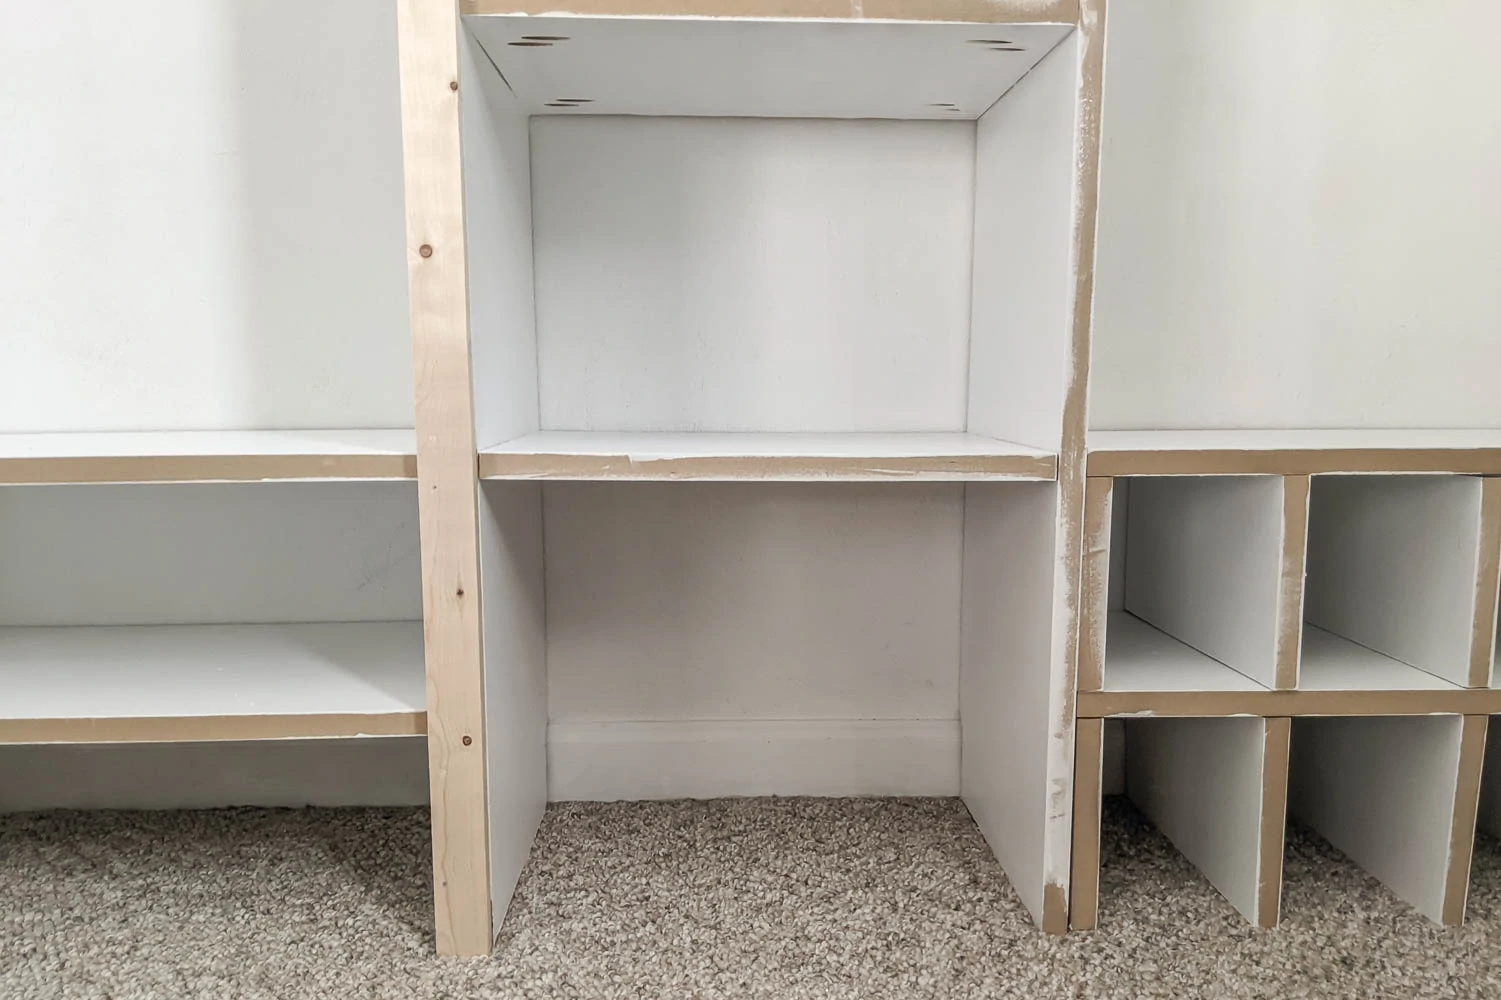 27 DIY closet shelves + organizers